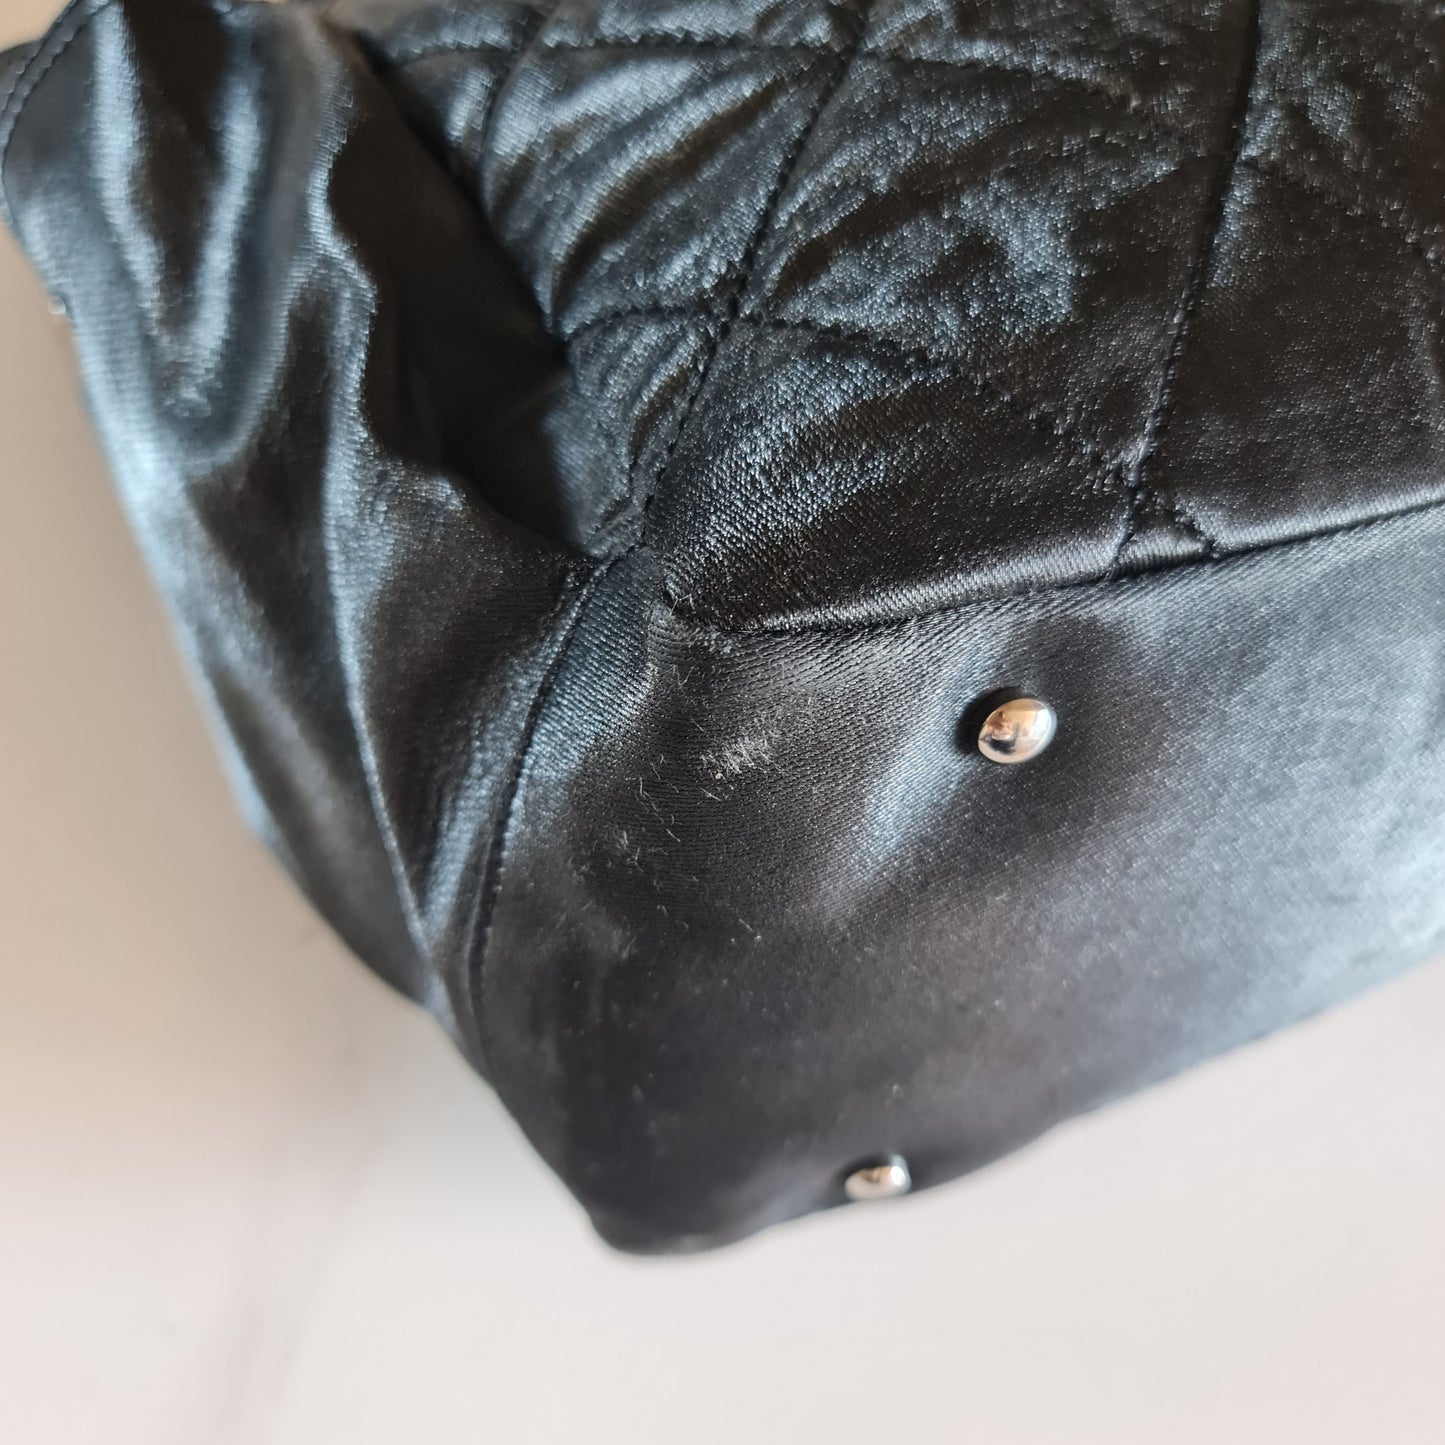 Chanel Black Fabric Biarritz Tote Bag (806)